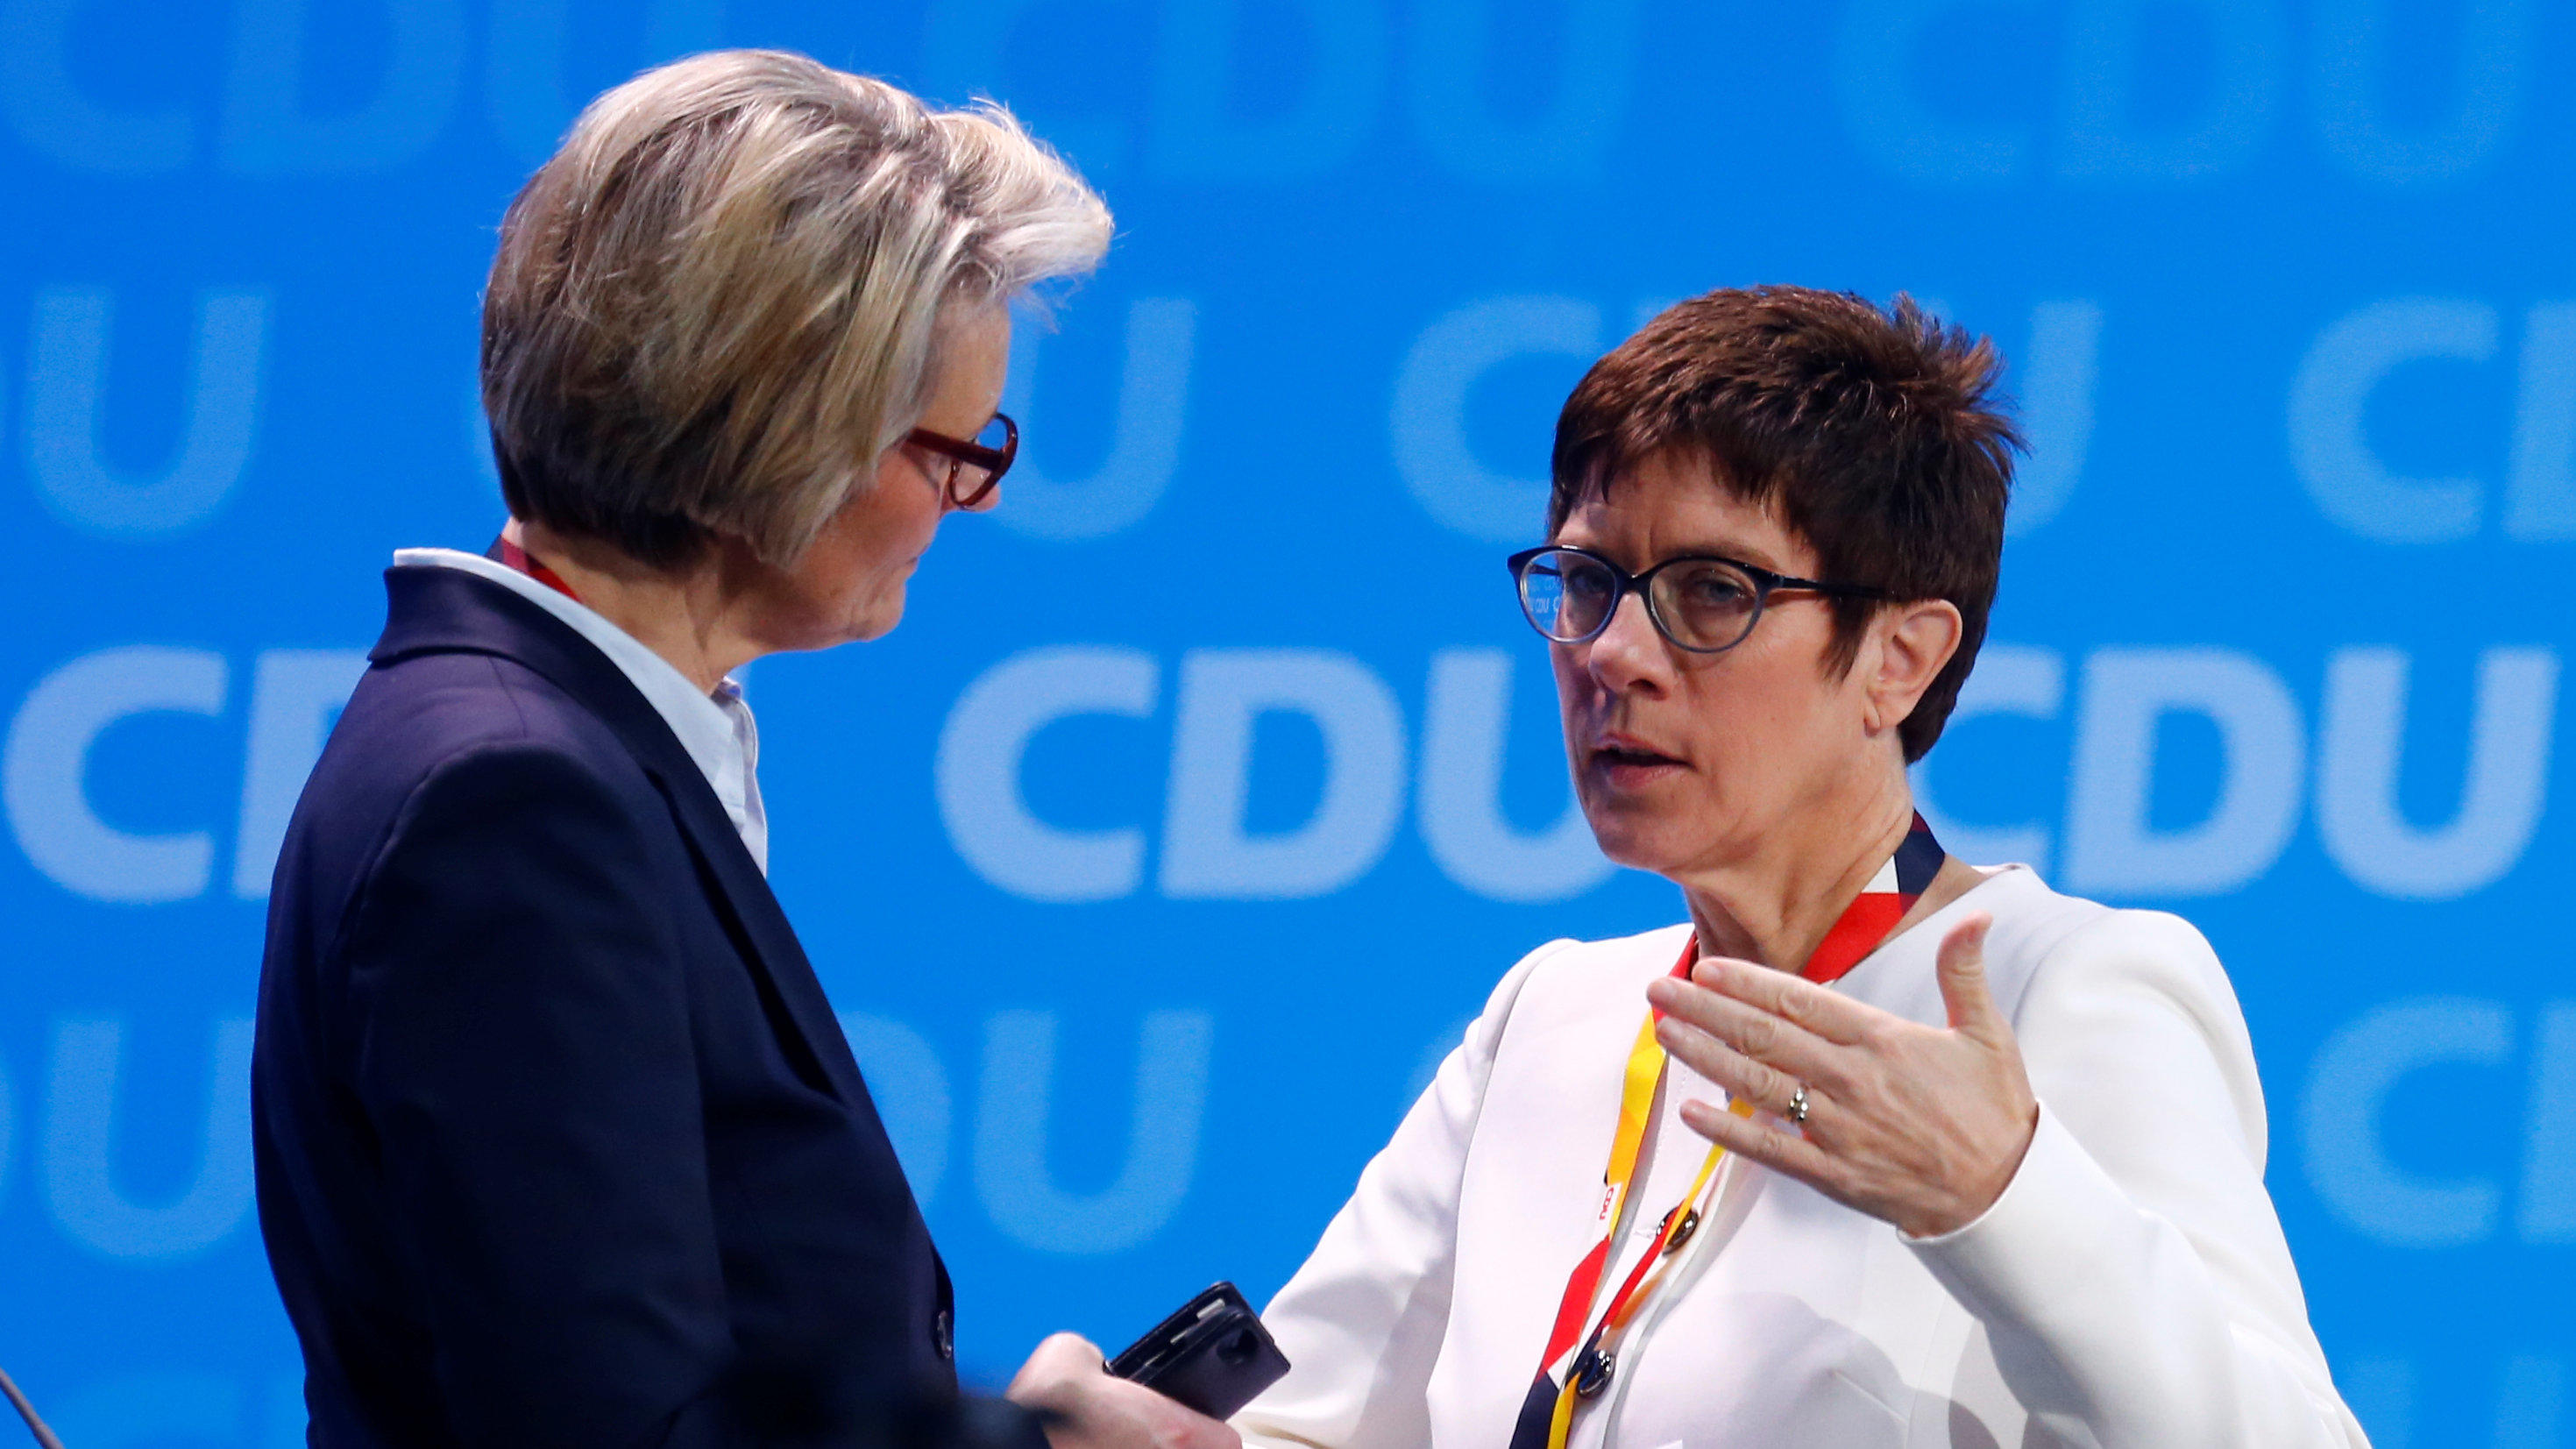 Anja Karliczek talks to Annegret Kramp-Karrenbauer before the Christian Democratic Union (CDU) party congress in Berlin, Germany, February 26, 2018.   REUTERS/Hannibal Hanschke